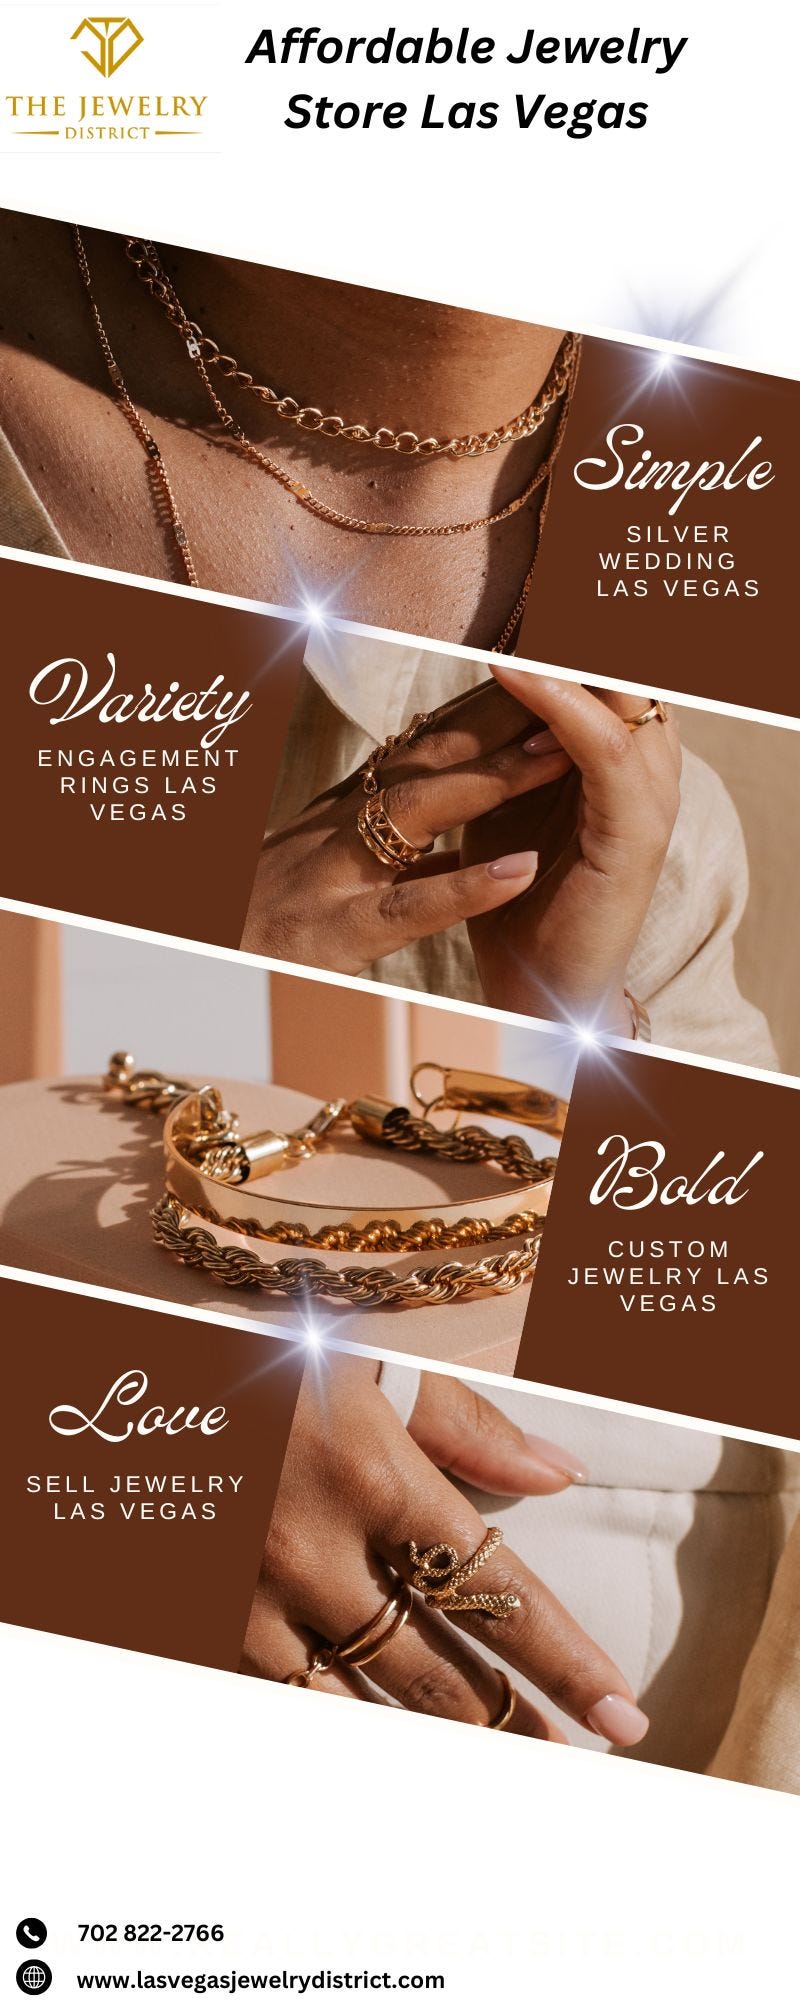 Sell Jewelry Las Vegas - The Jewelry District - Medium